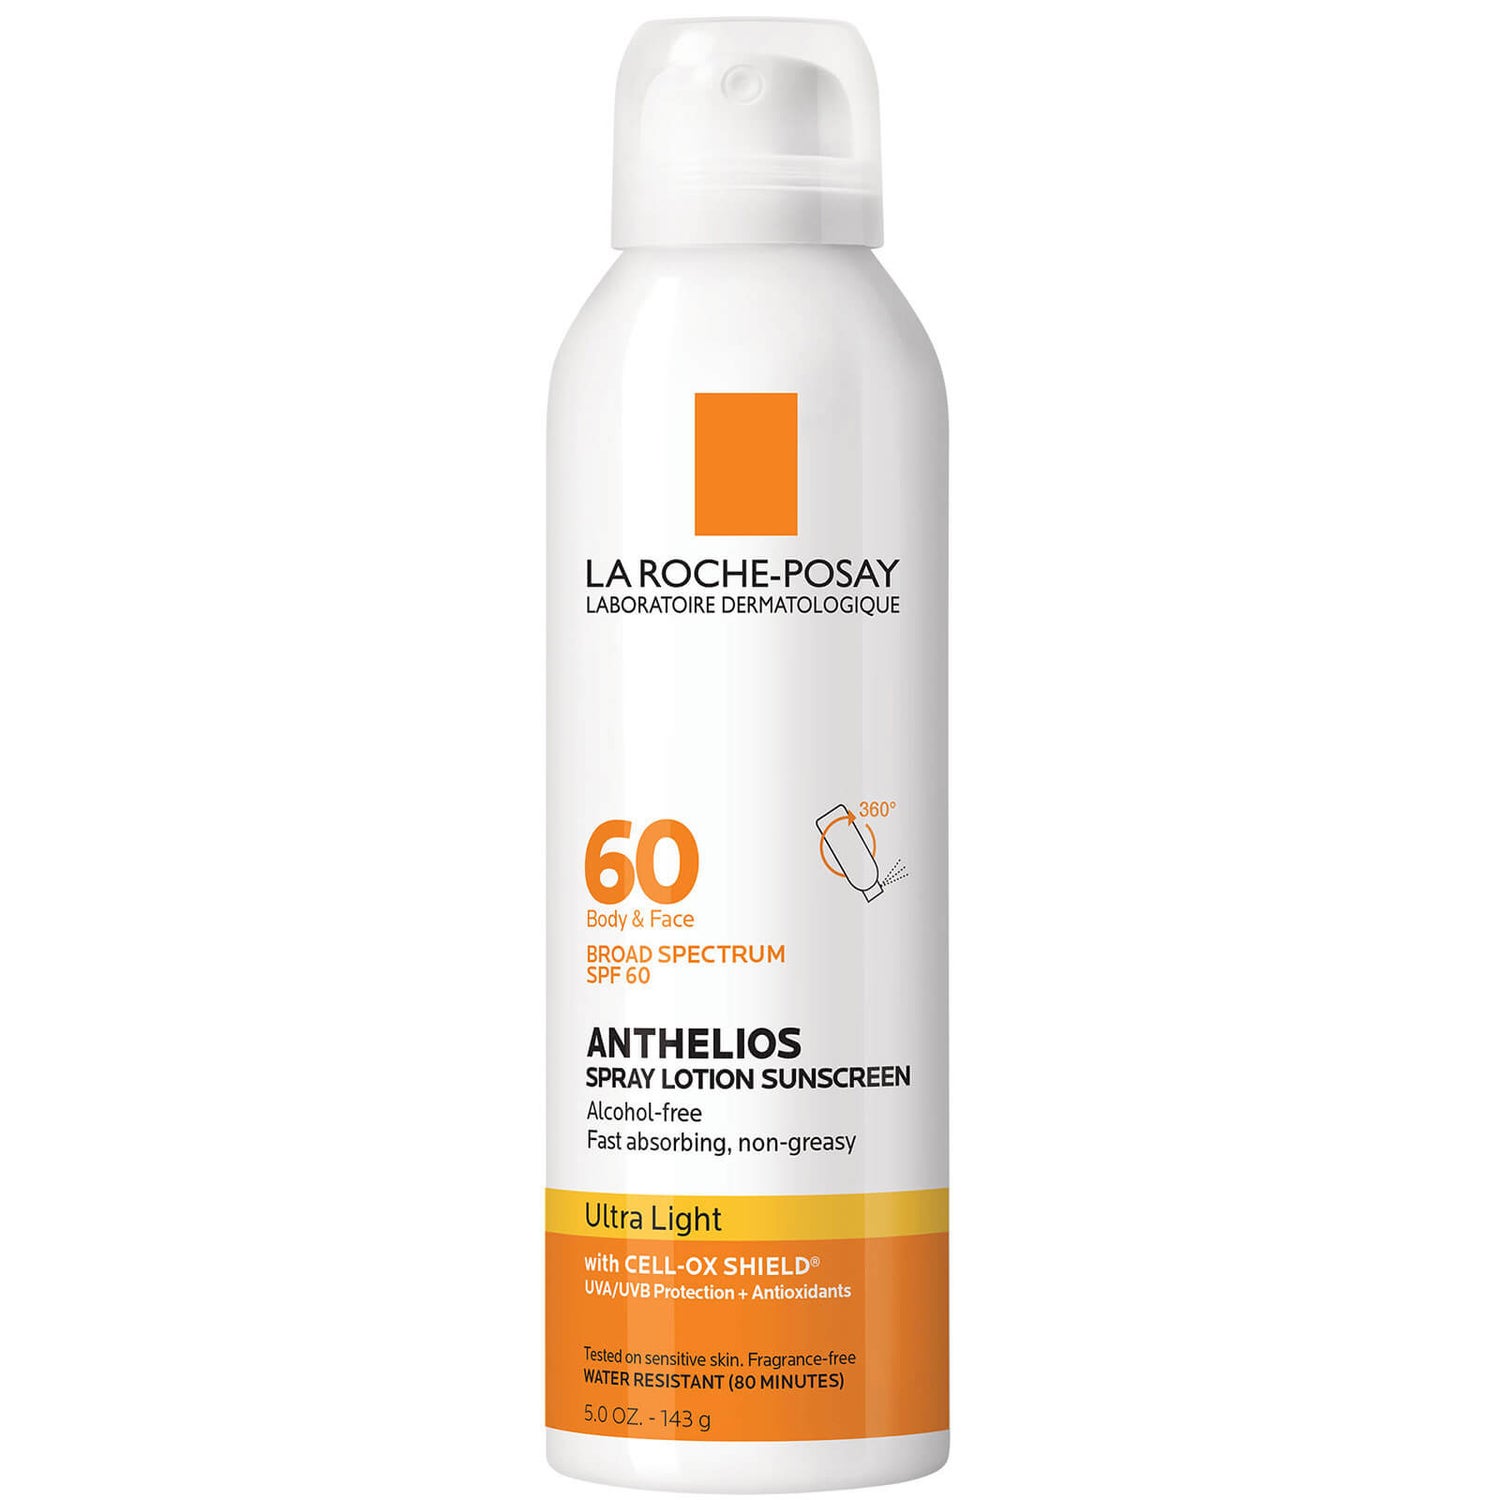 La Roche-Posay Anthelios Ultra-Light Sunscreen Spray Lotion SPF 60 (5 oz.)